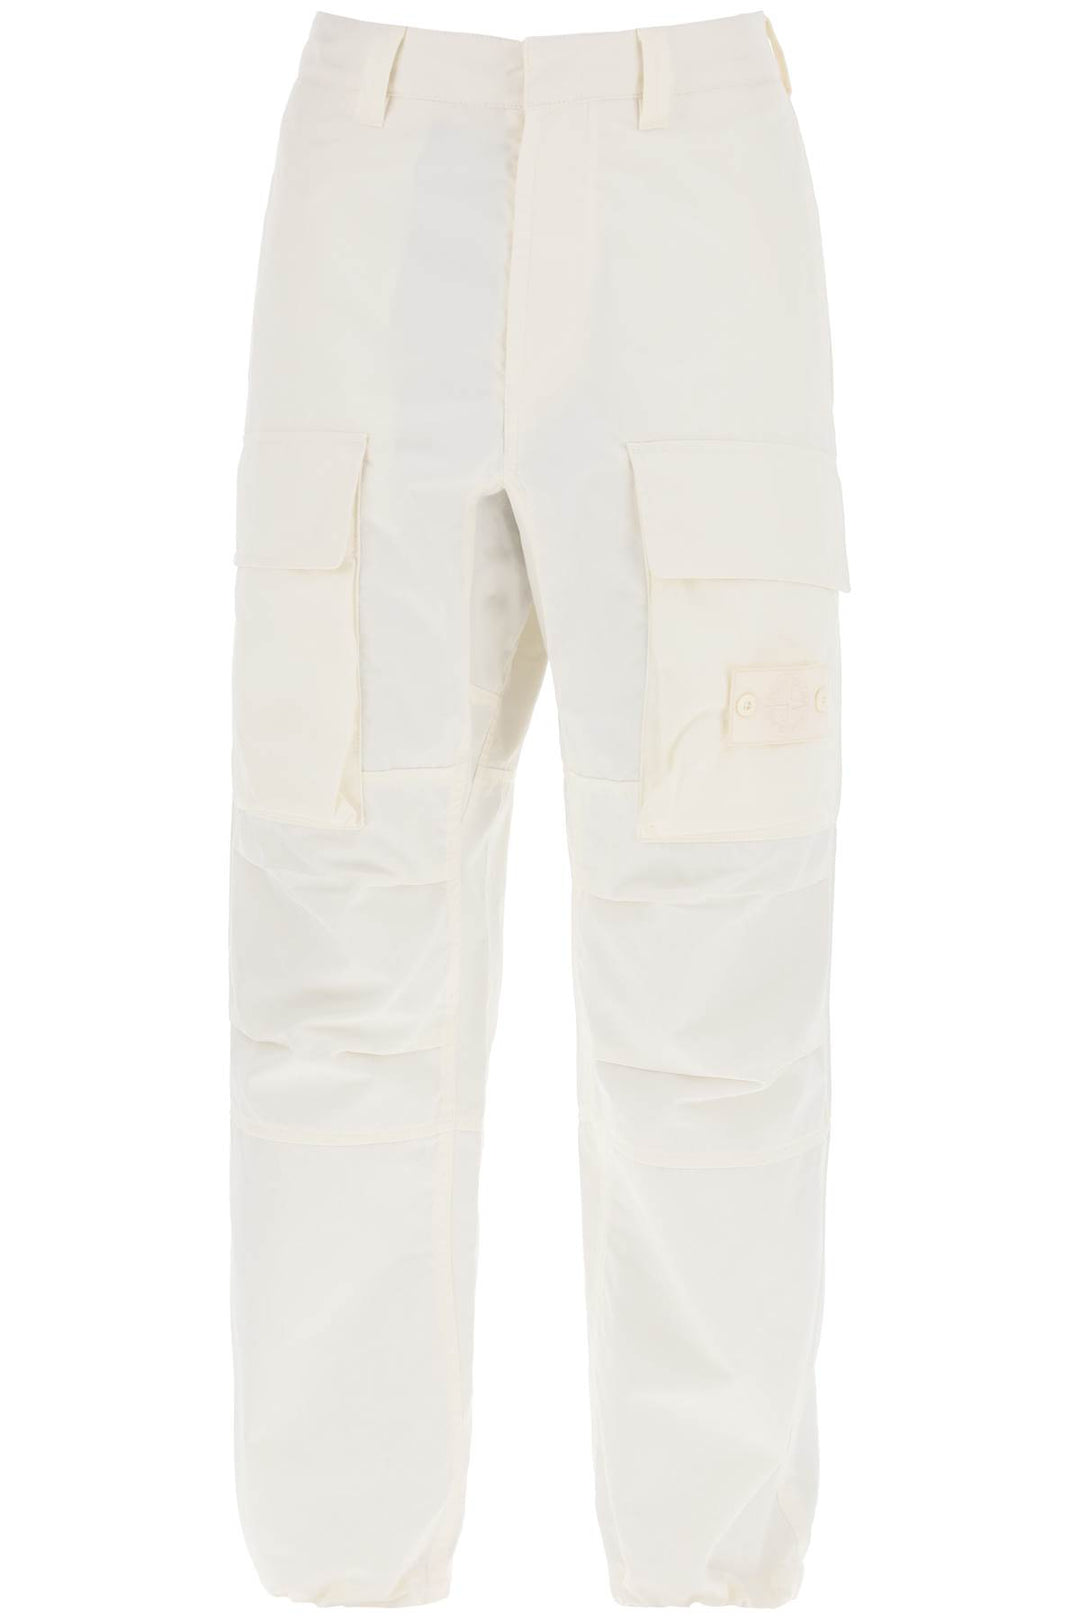 Stone Island Organic Cotton Ghost Piece Cargo Pants.   Bianco